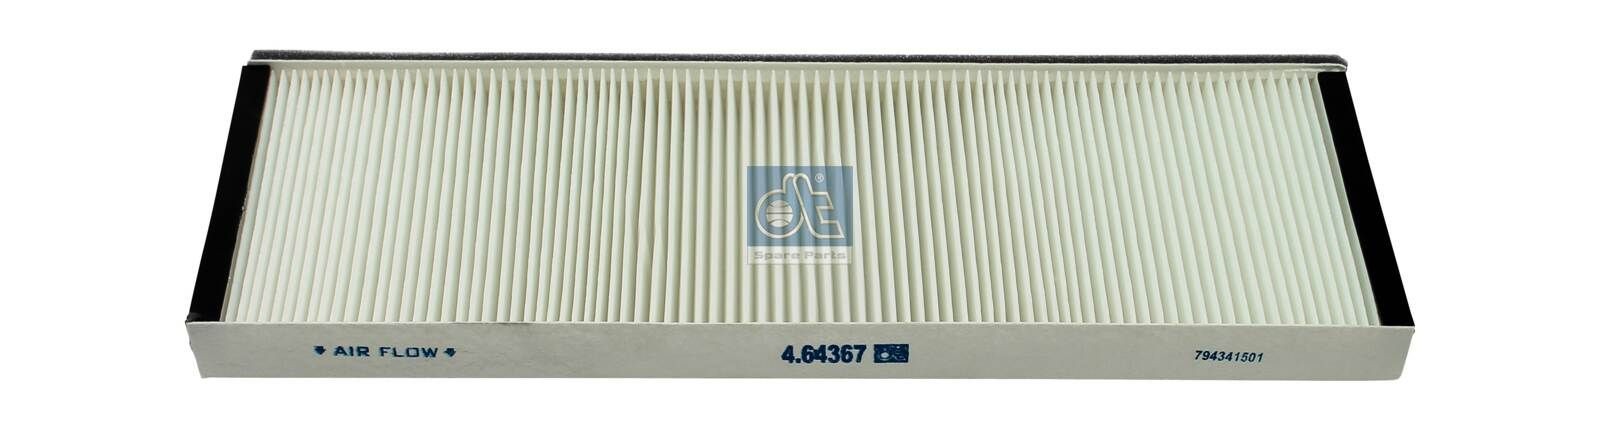 CU 4662 DT Spare Parts 4.64367 Pollen filter 001 835 70 47